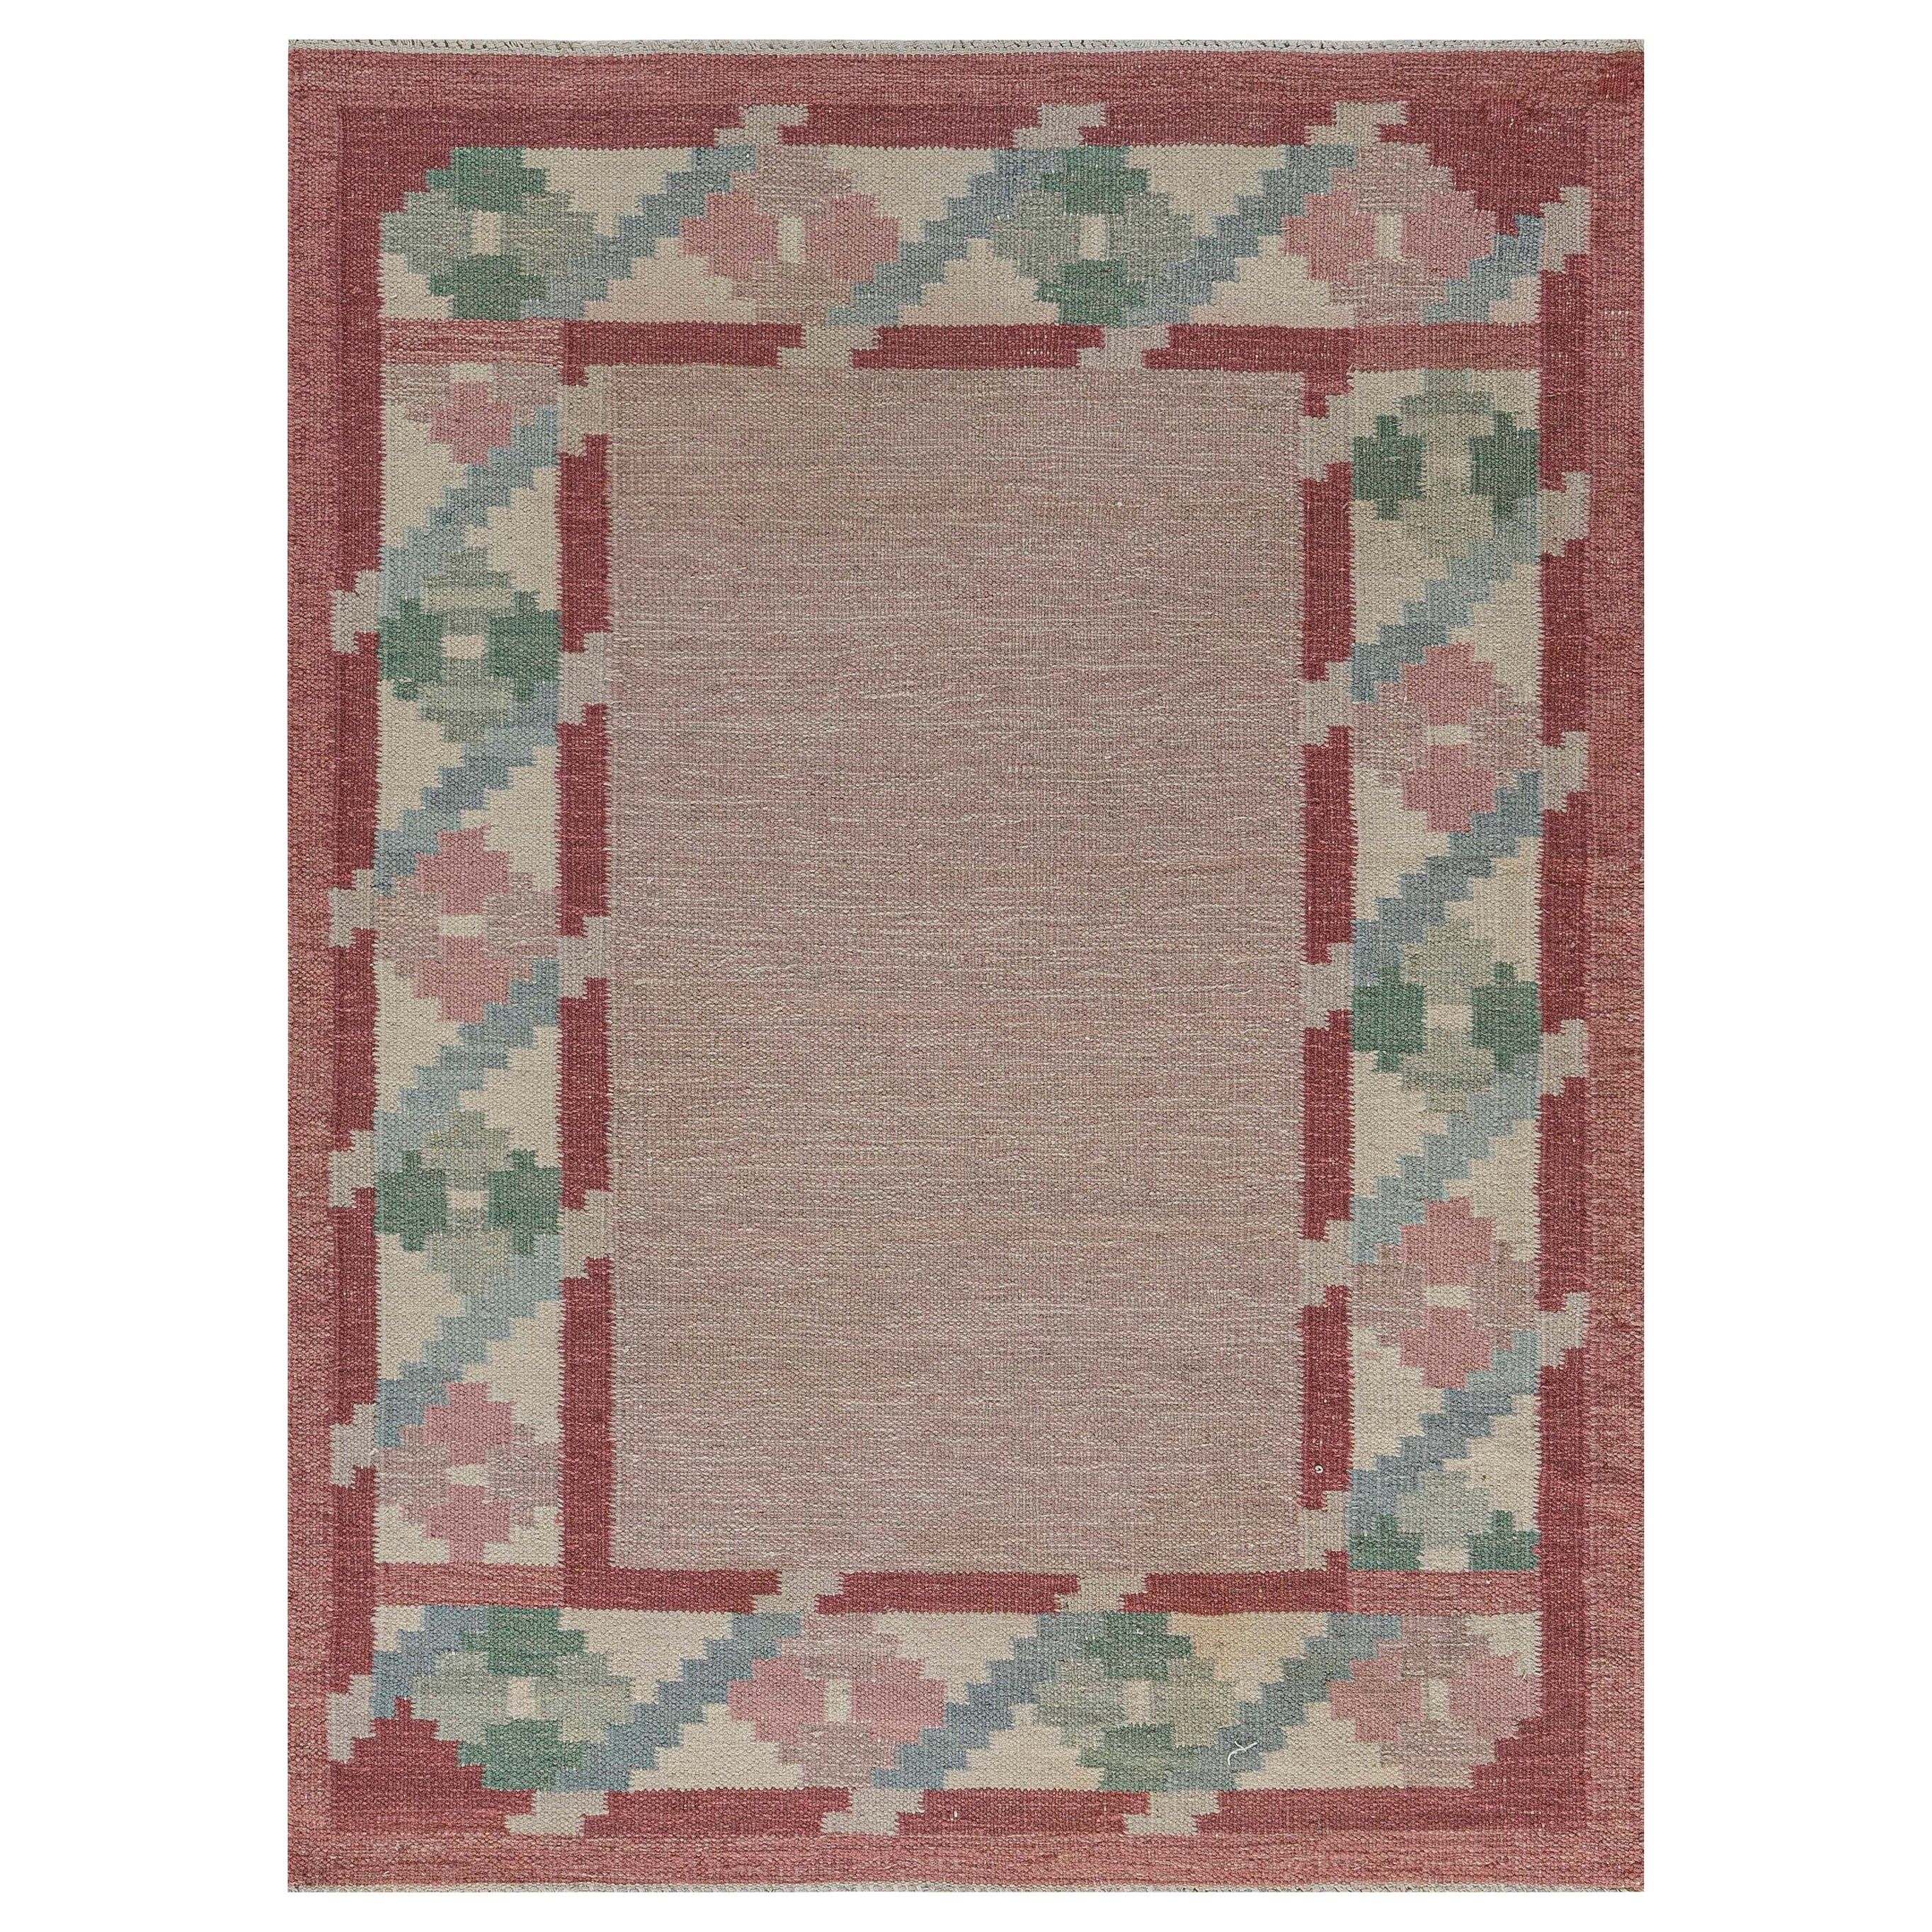 Vintage Swedish Beige, Green, Pink Flat Weave Rug